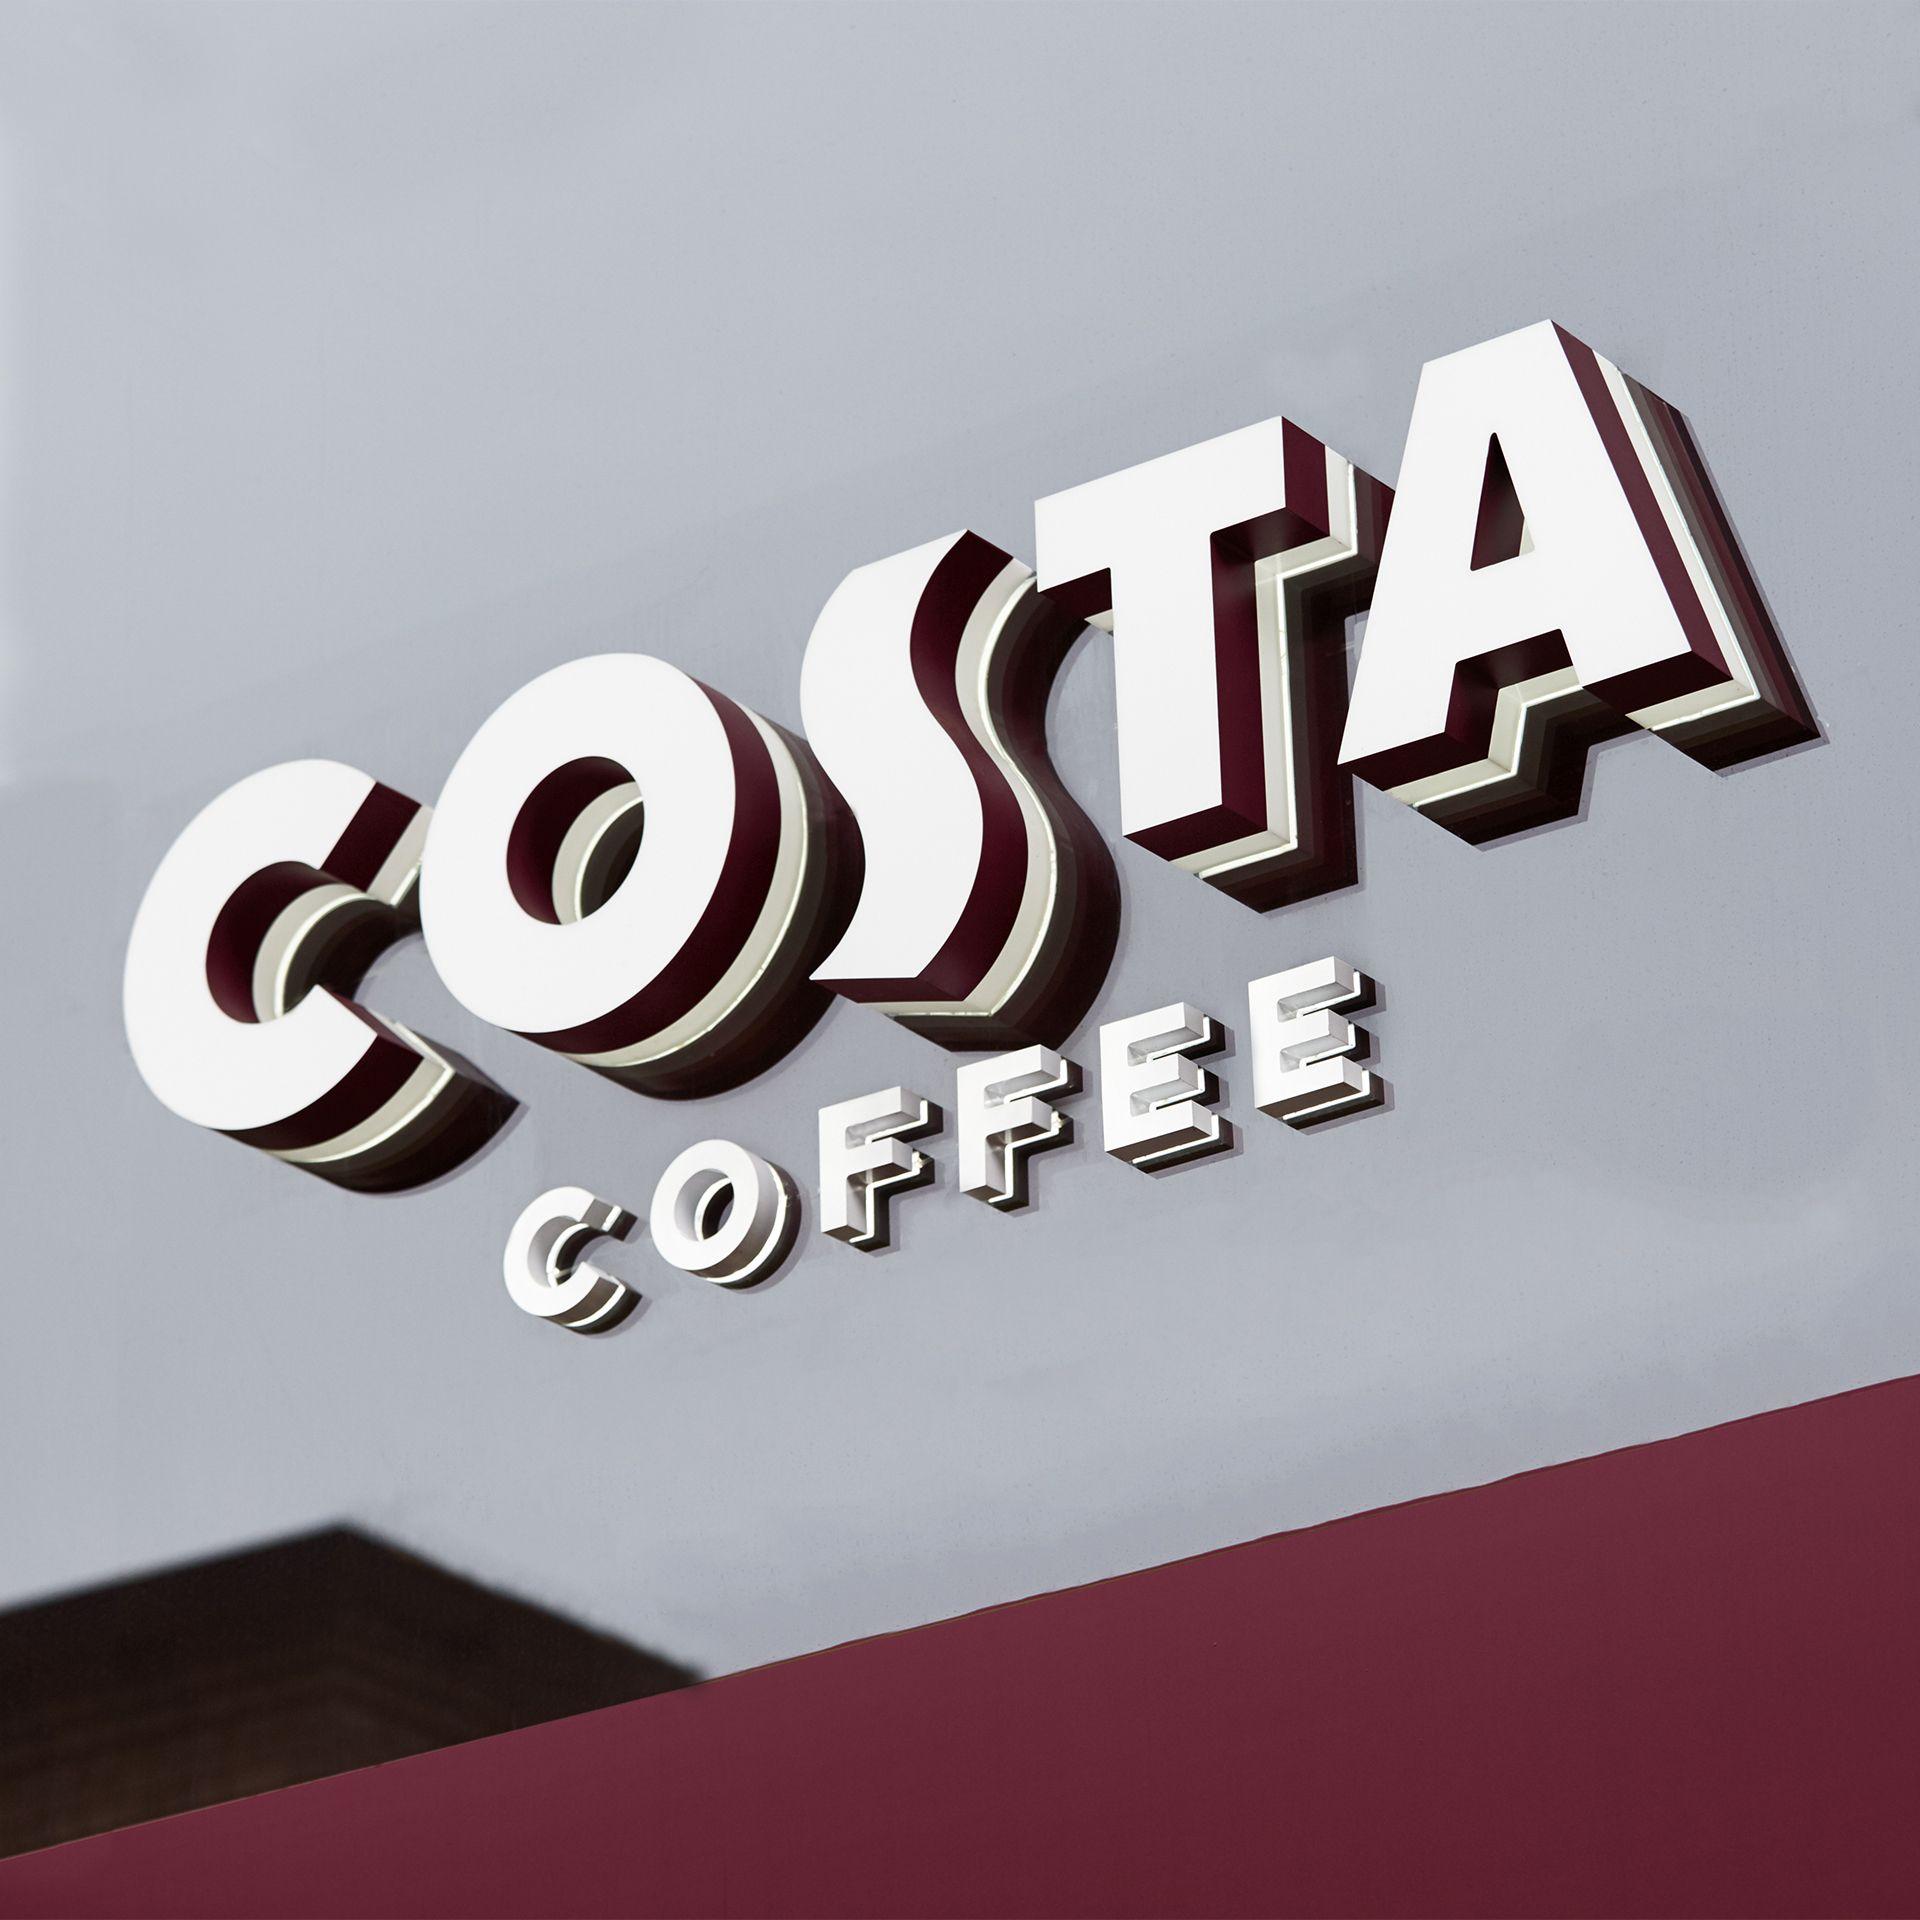 Costa Brand Logo - COSTA COFFEE, GLOBAL BRAND IDENTITY. Our Design Agency